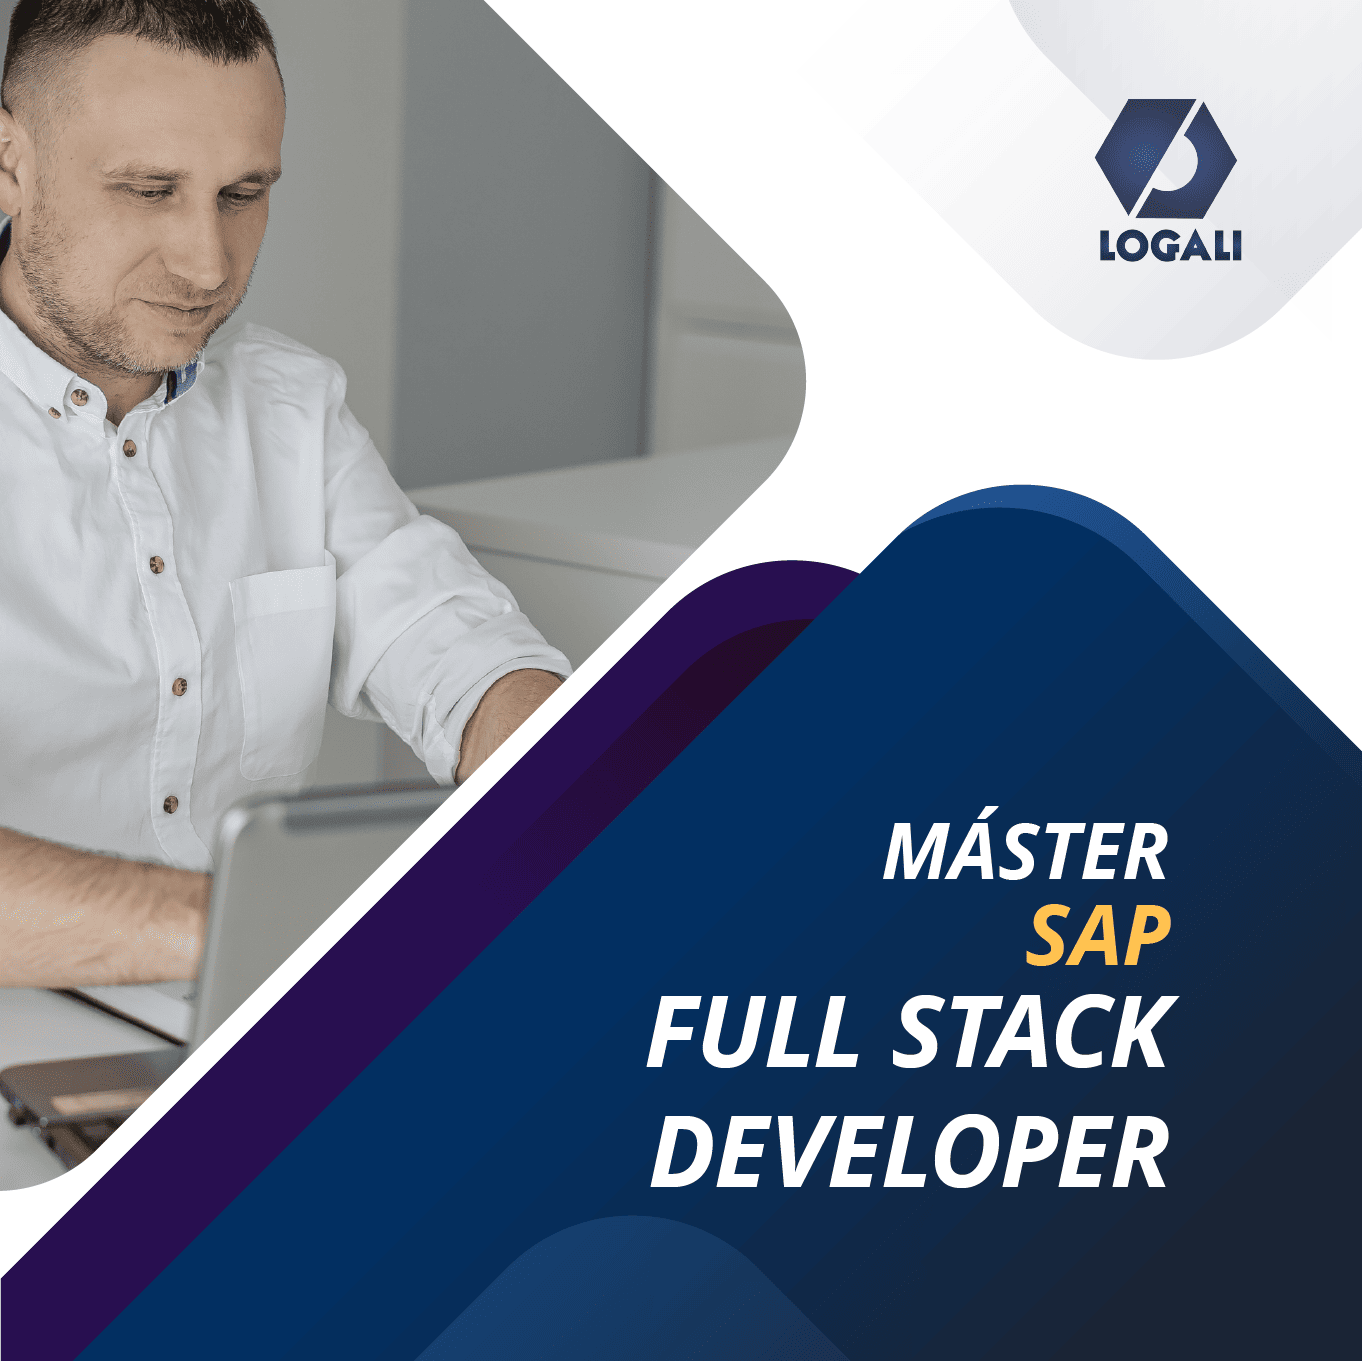 Portada Máster Full Stack Developer